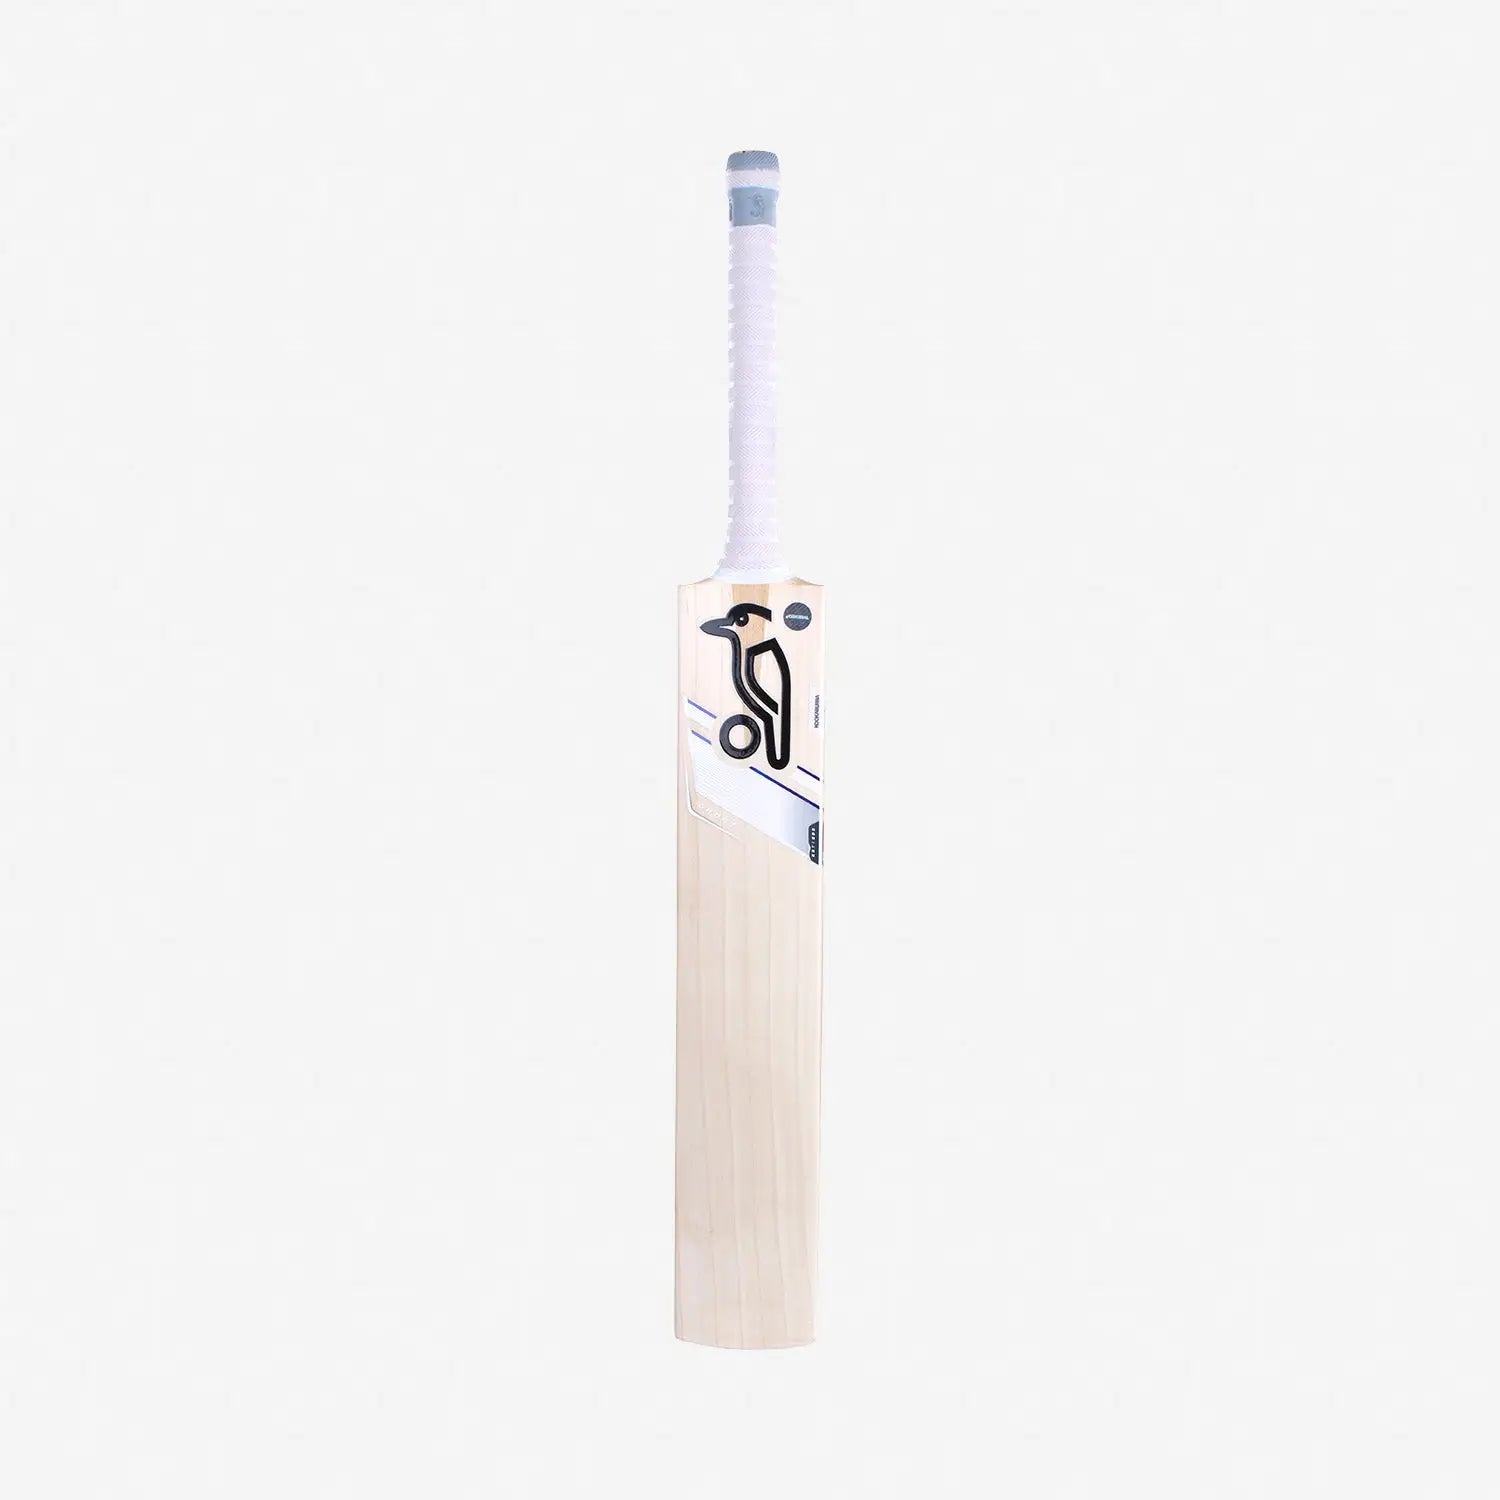 Kookaburra Ghost 6.3 Cricket Bat English Willow - Short Handle (Standard Adult Size Bat) - BATS - MENS ENGLISH WILLOW